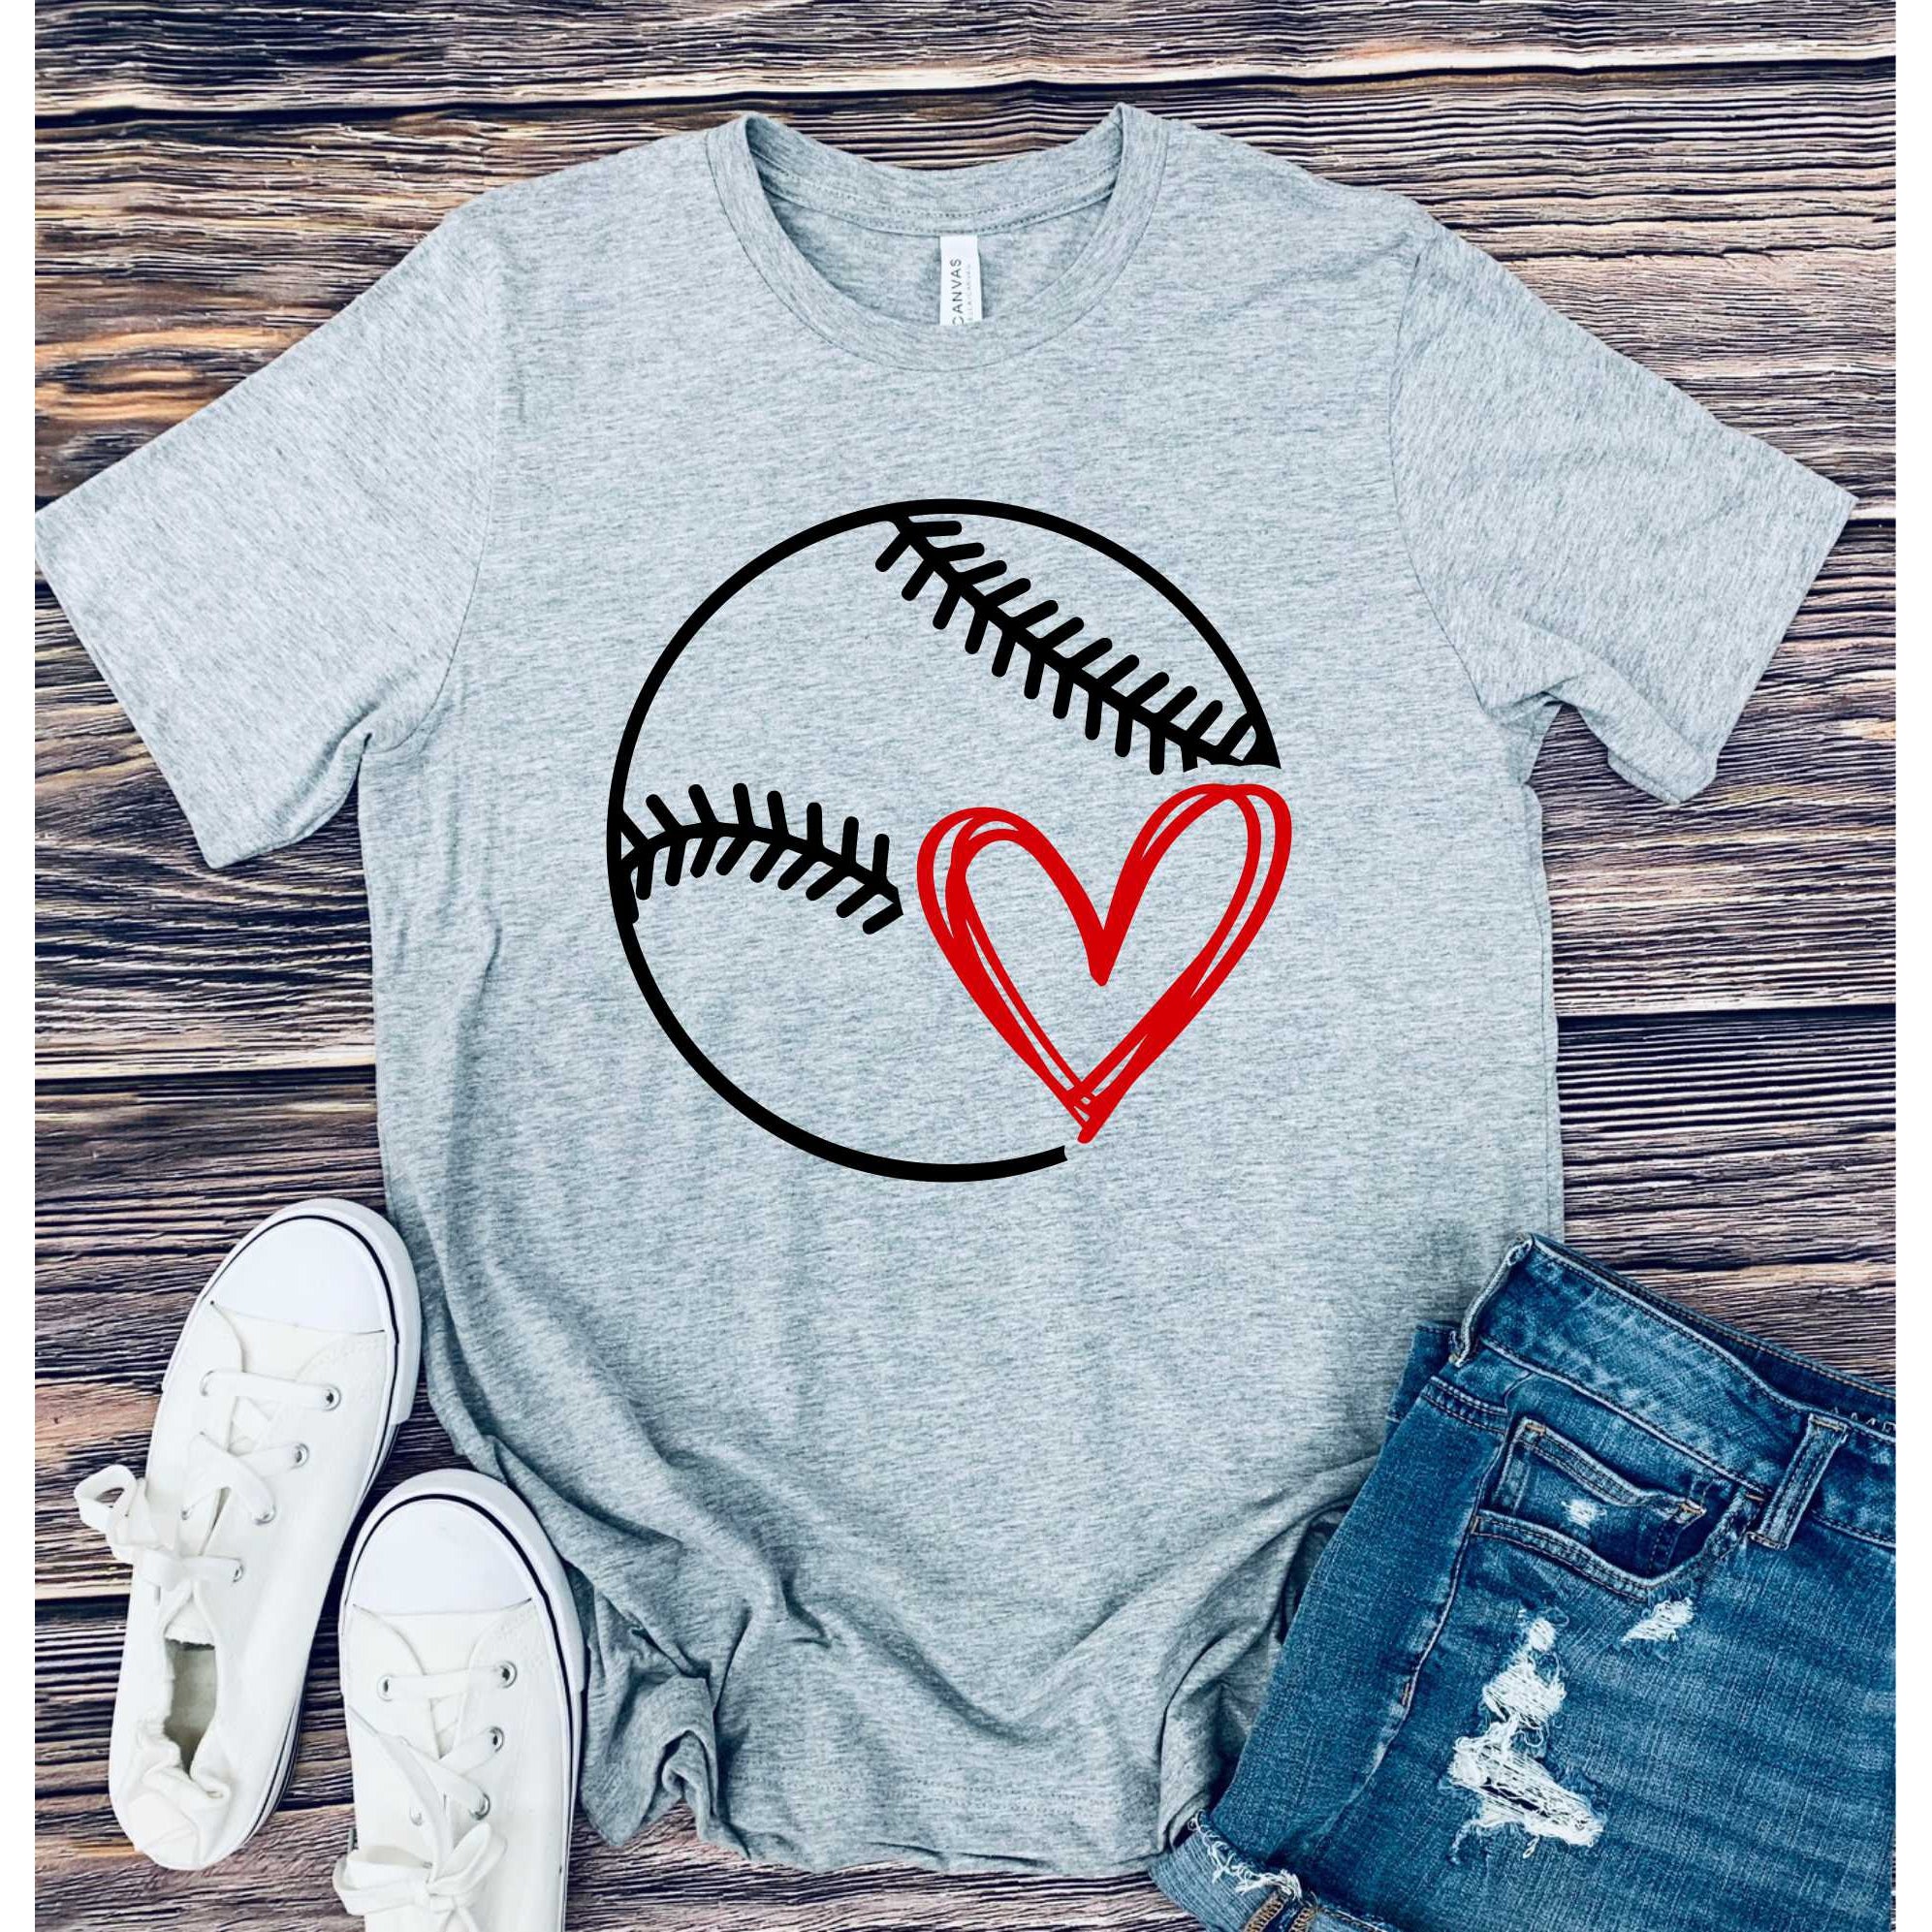 Baseball/Softball with Heart Graphic tee